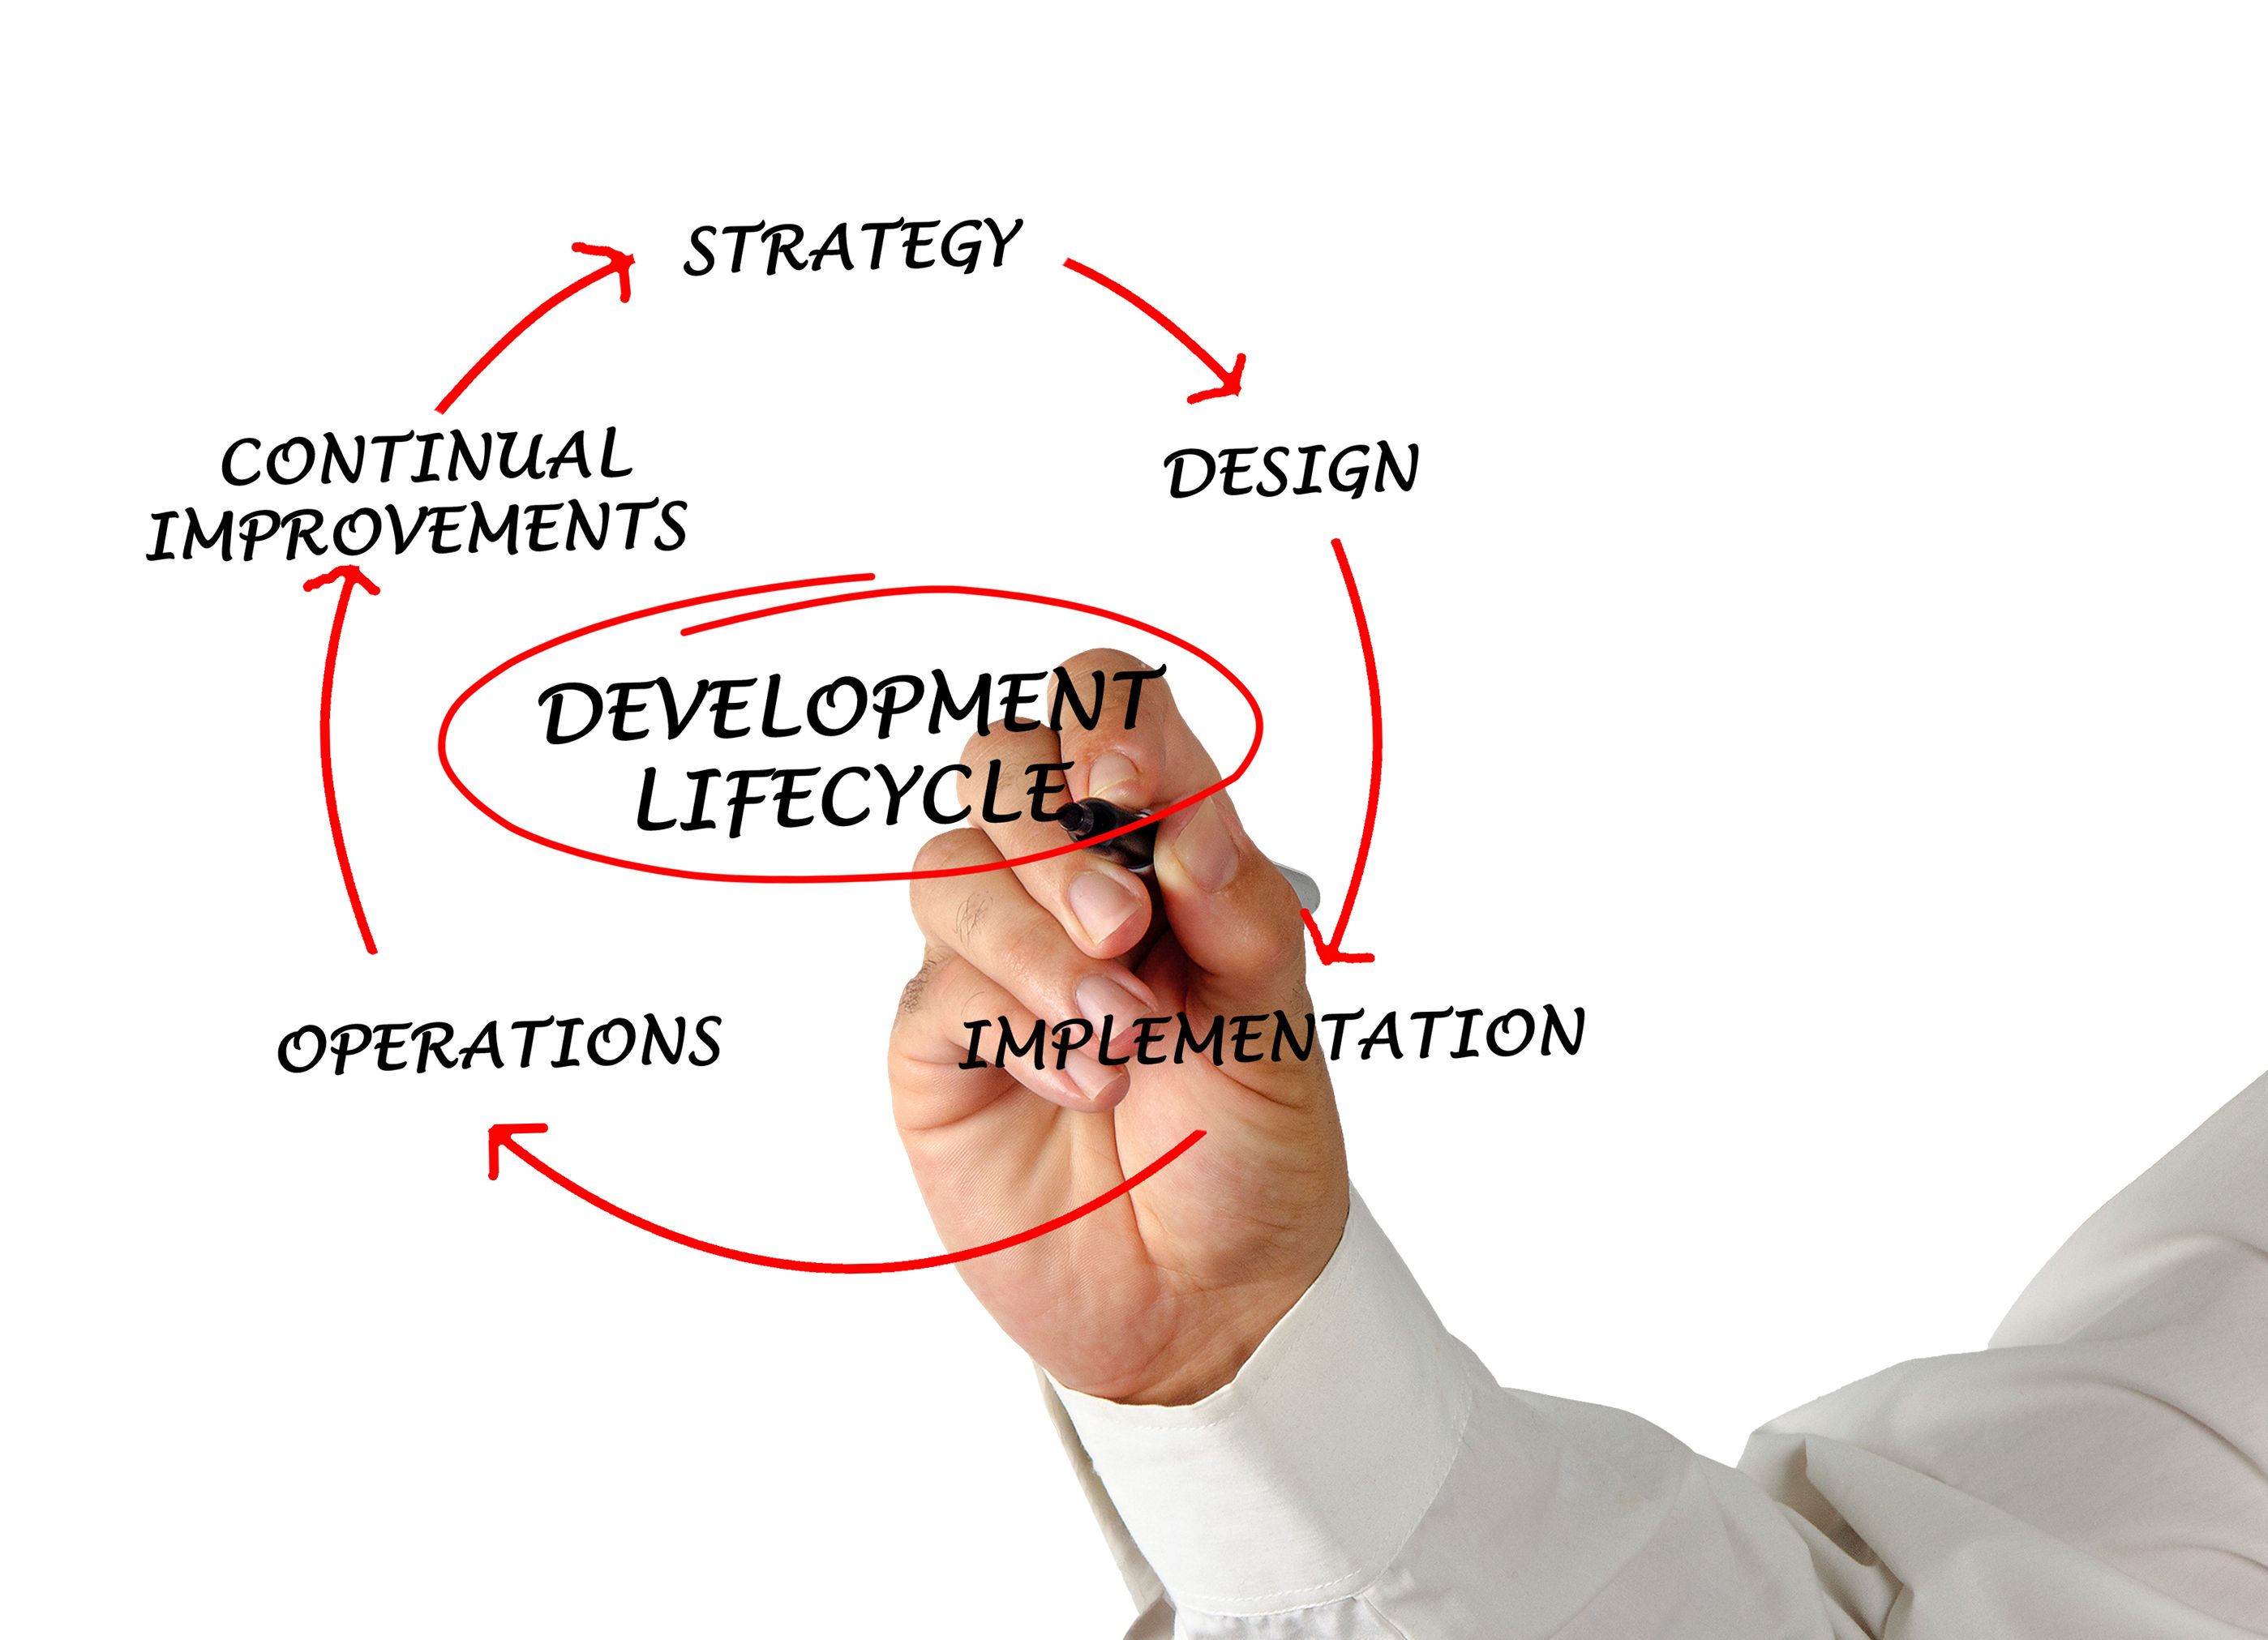 Presentation of development lifecycle